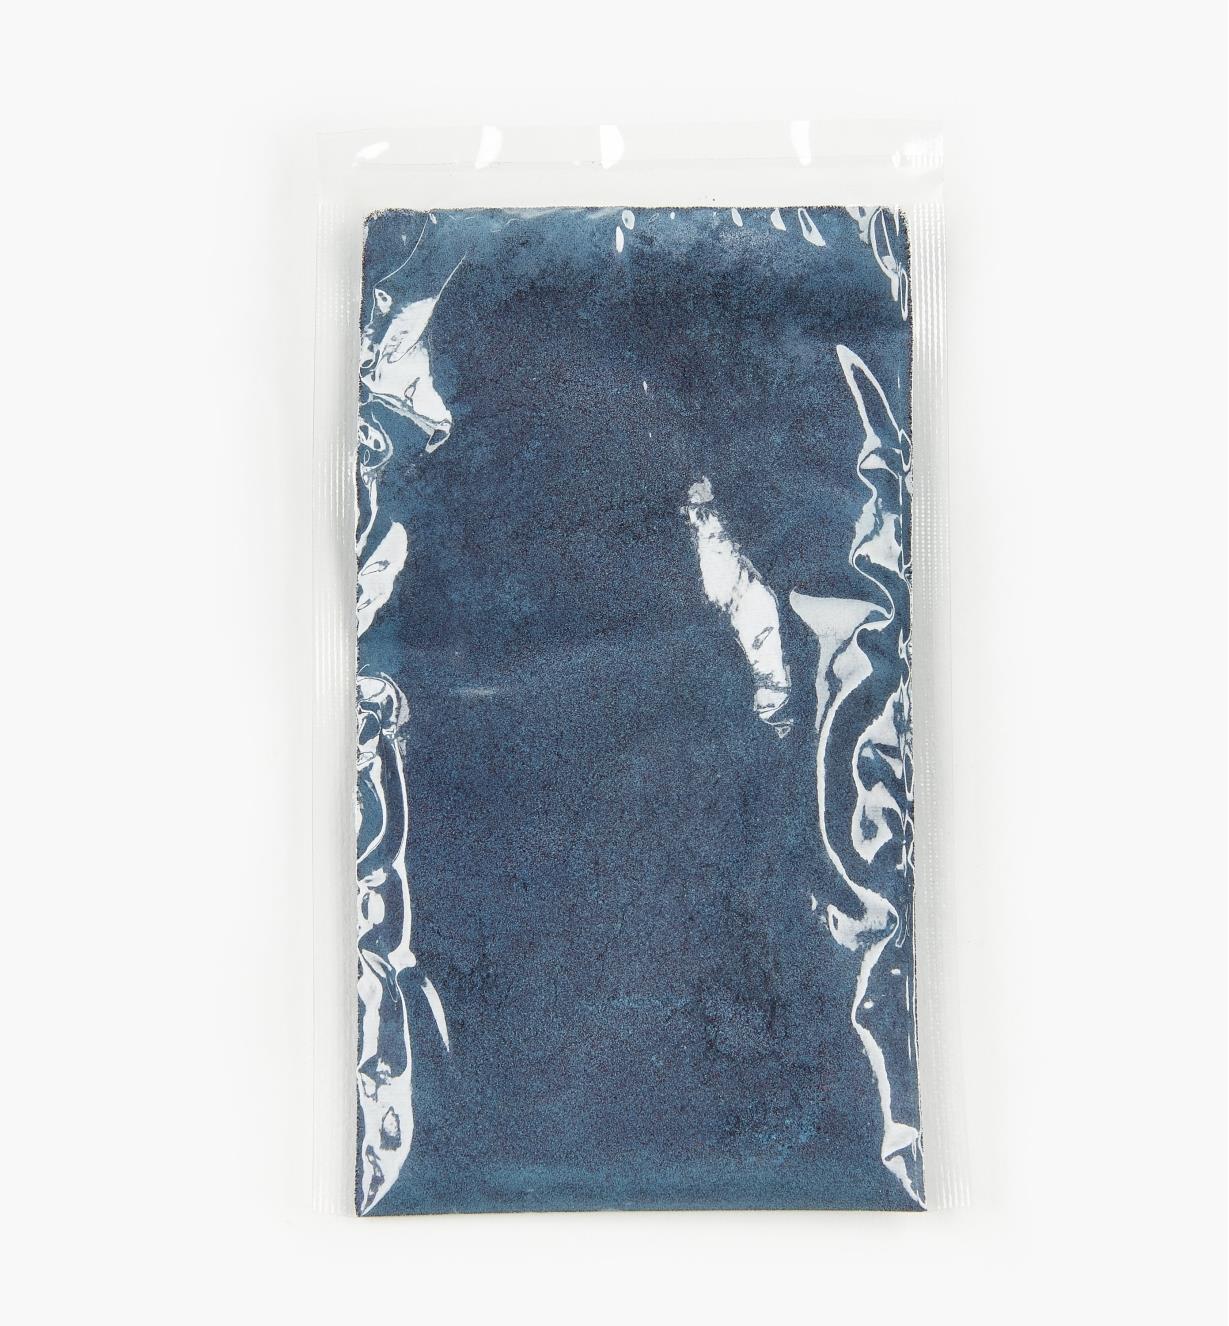 56Z0804 - Teinture d'aniline, bleu paon